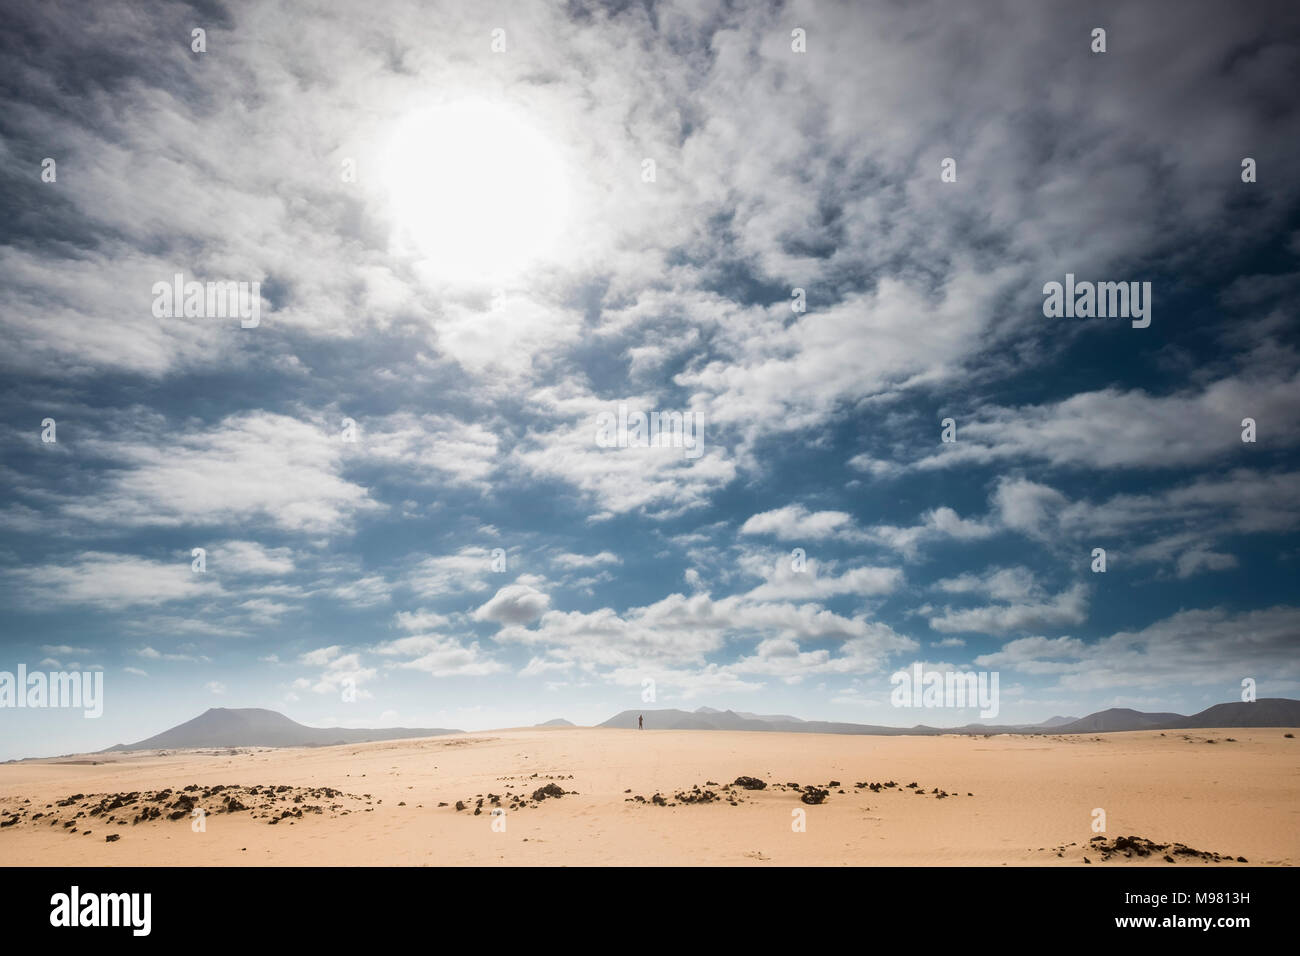 Spain, Canary Islands, Fuerteventura, Parque Natural de Corralejo, small person standing on dune Stock Photo